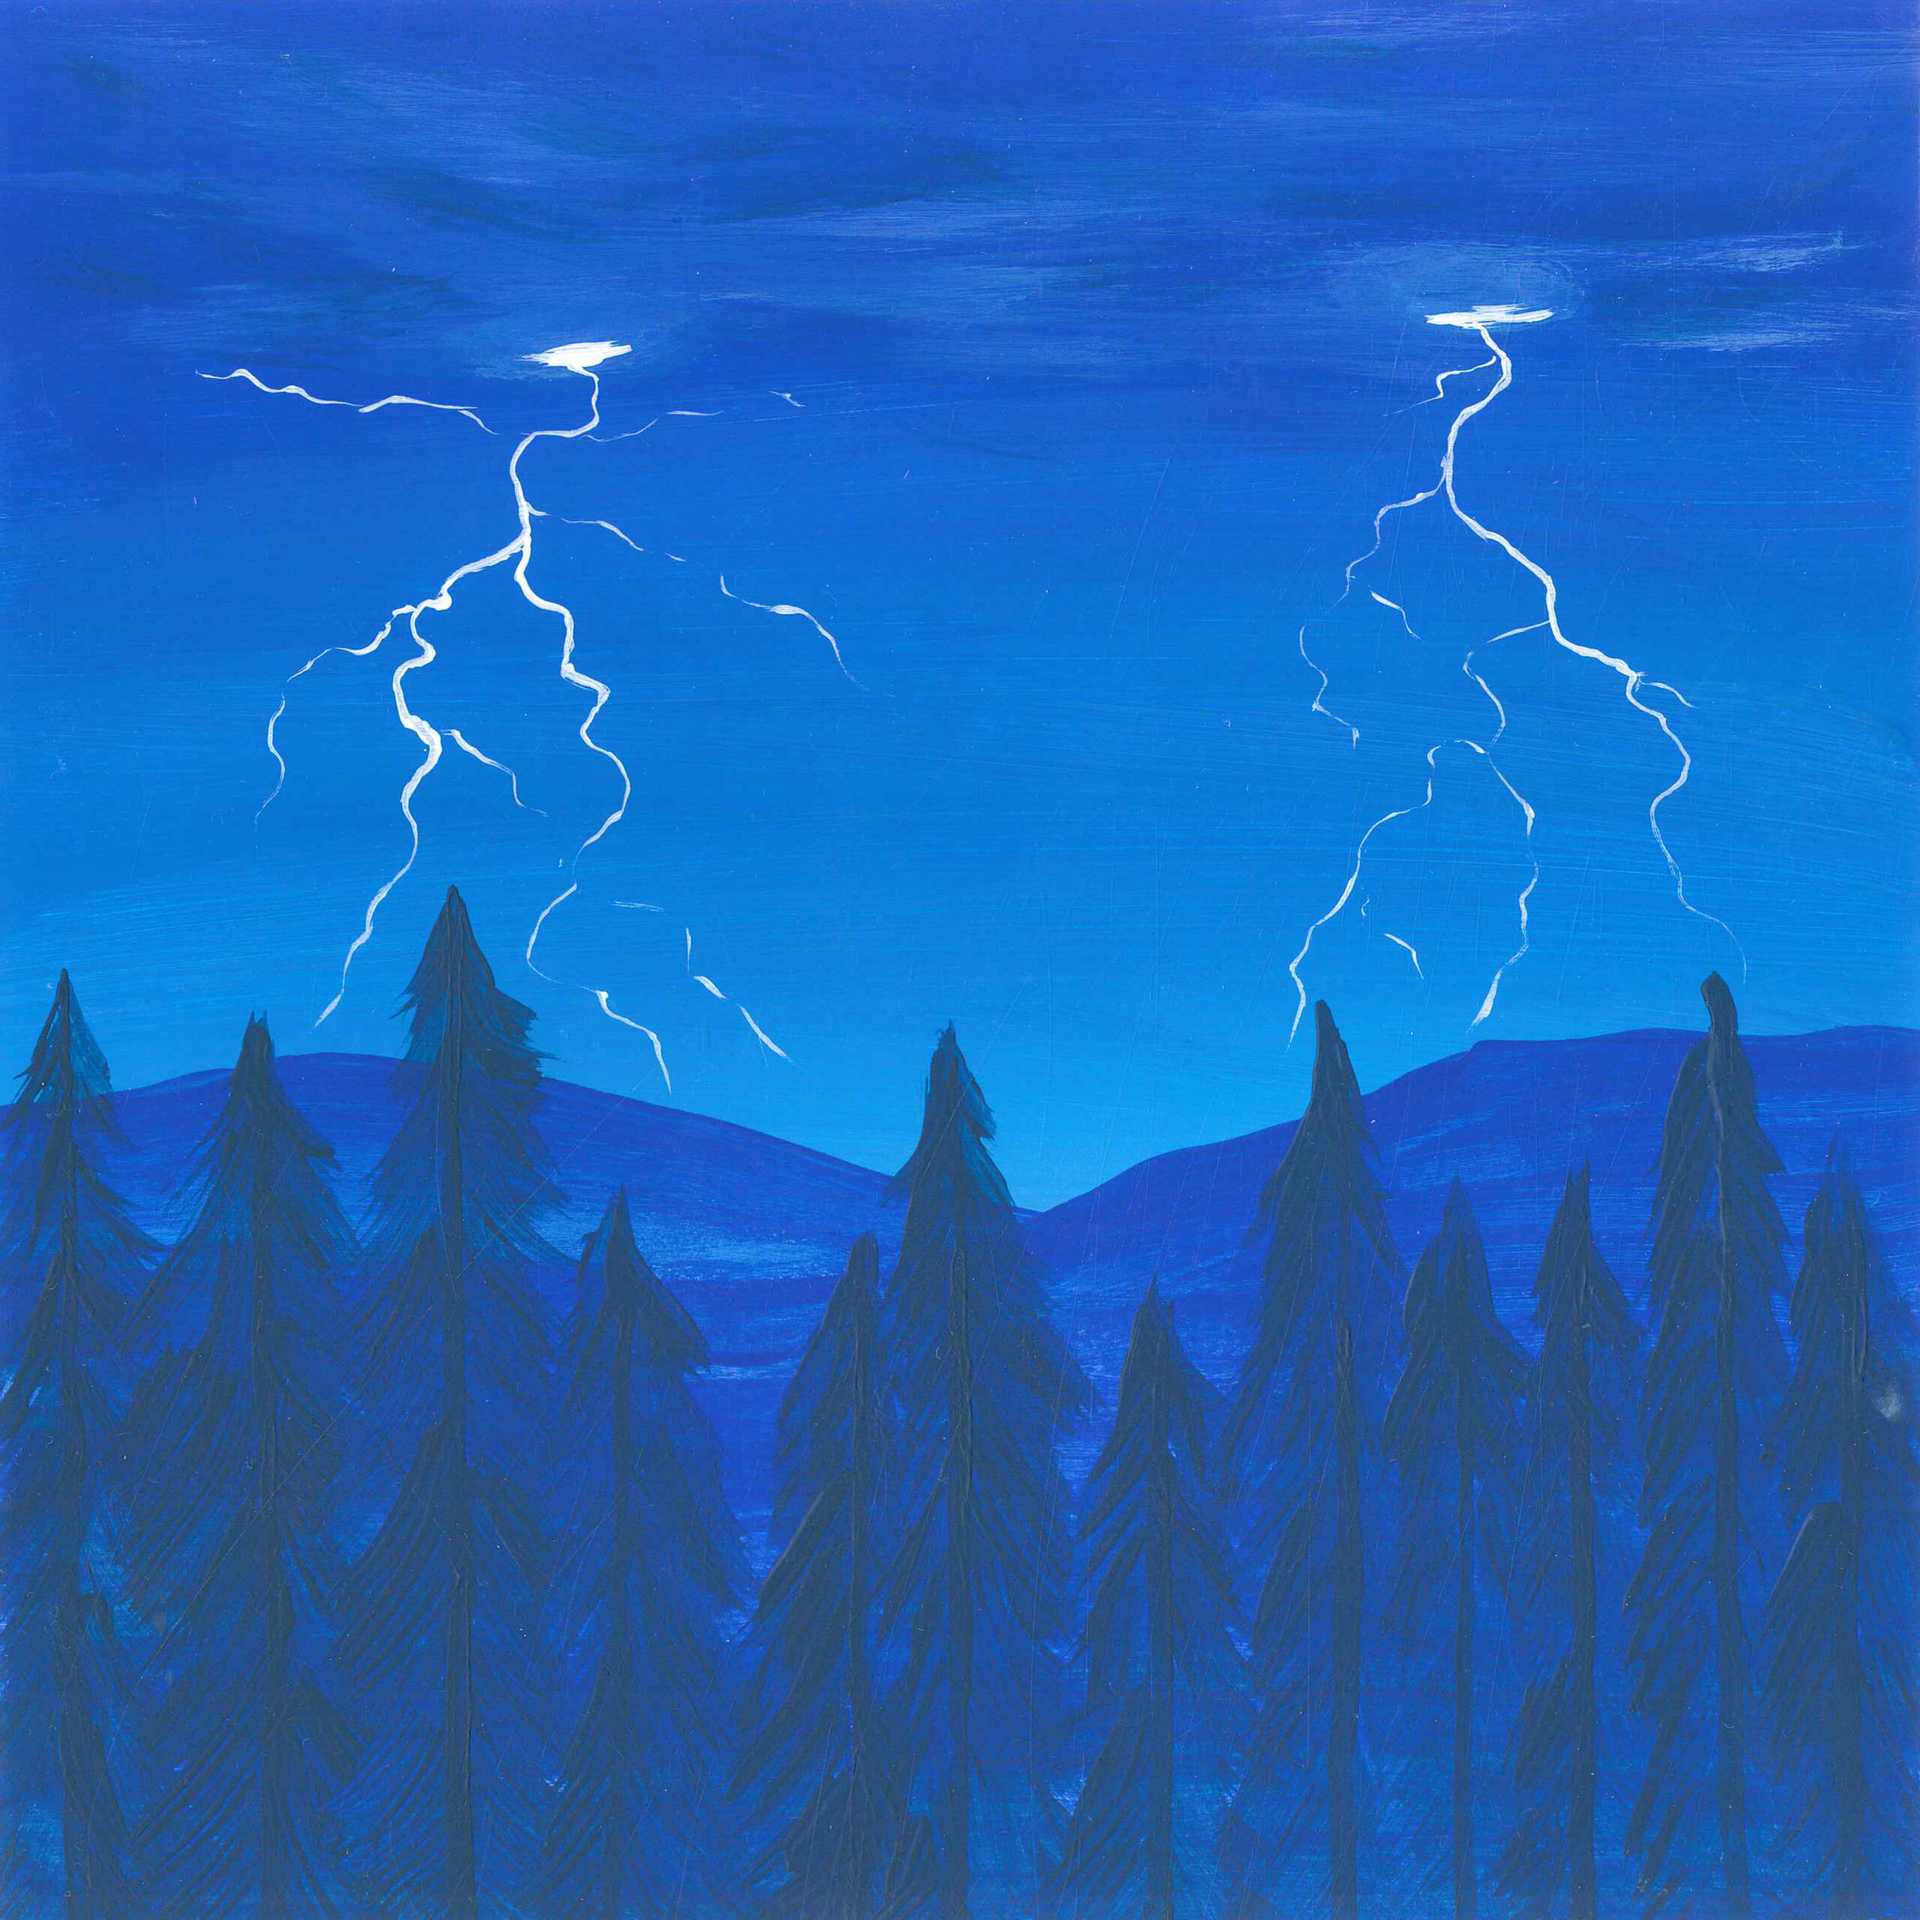 Summer Thunderstorm at Mountain Ridge - earth.fm